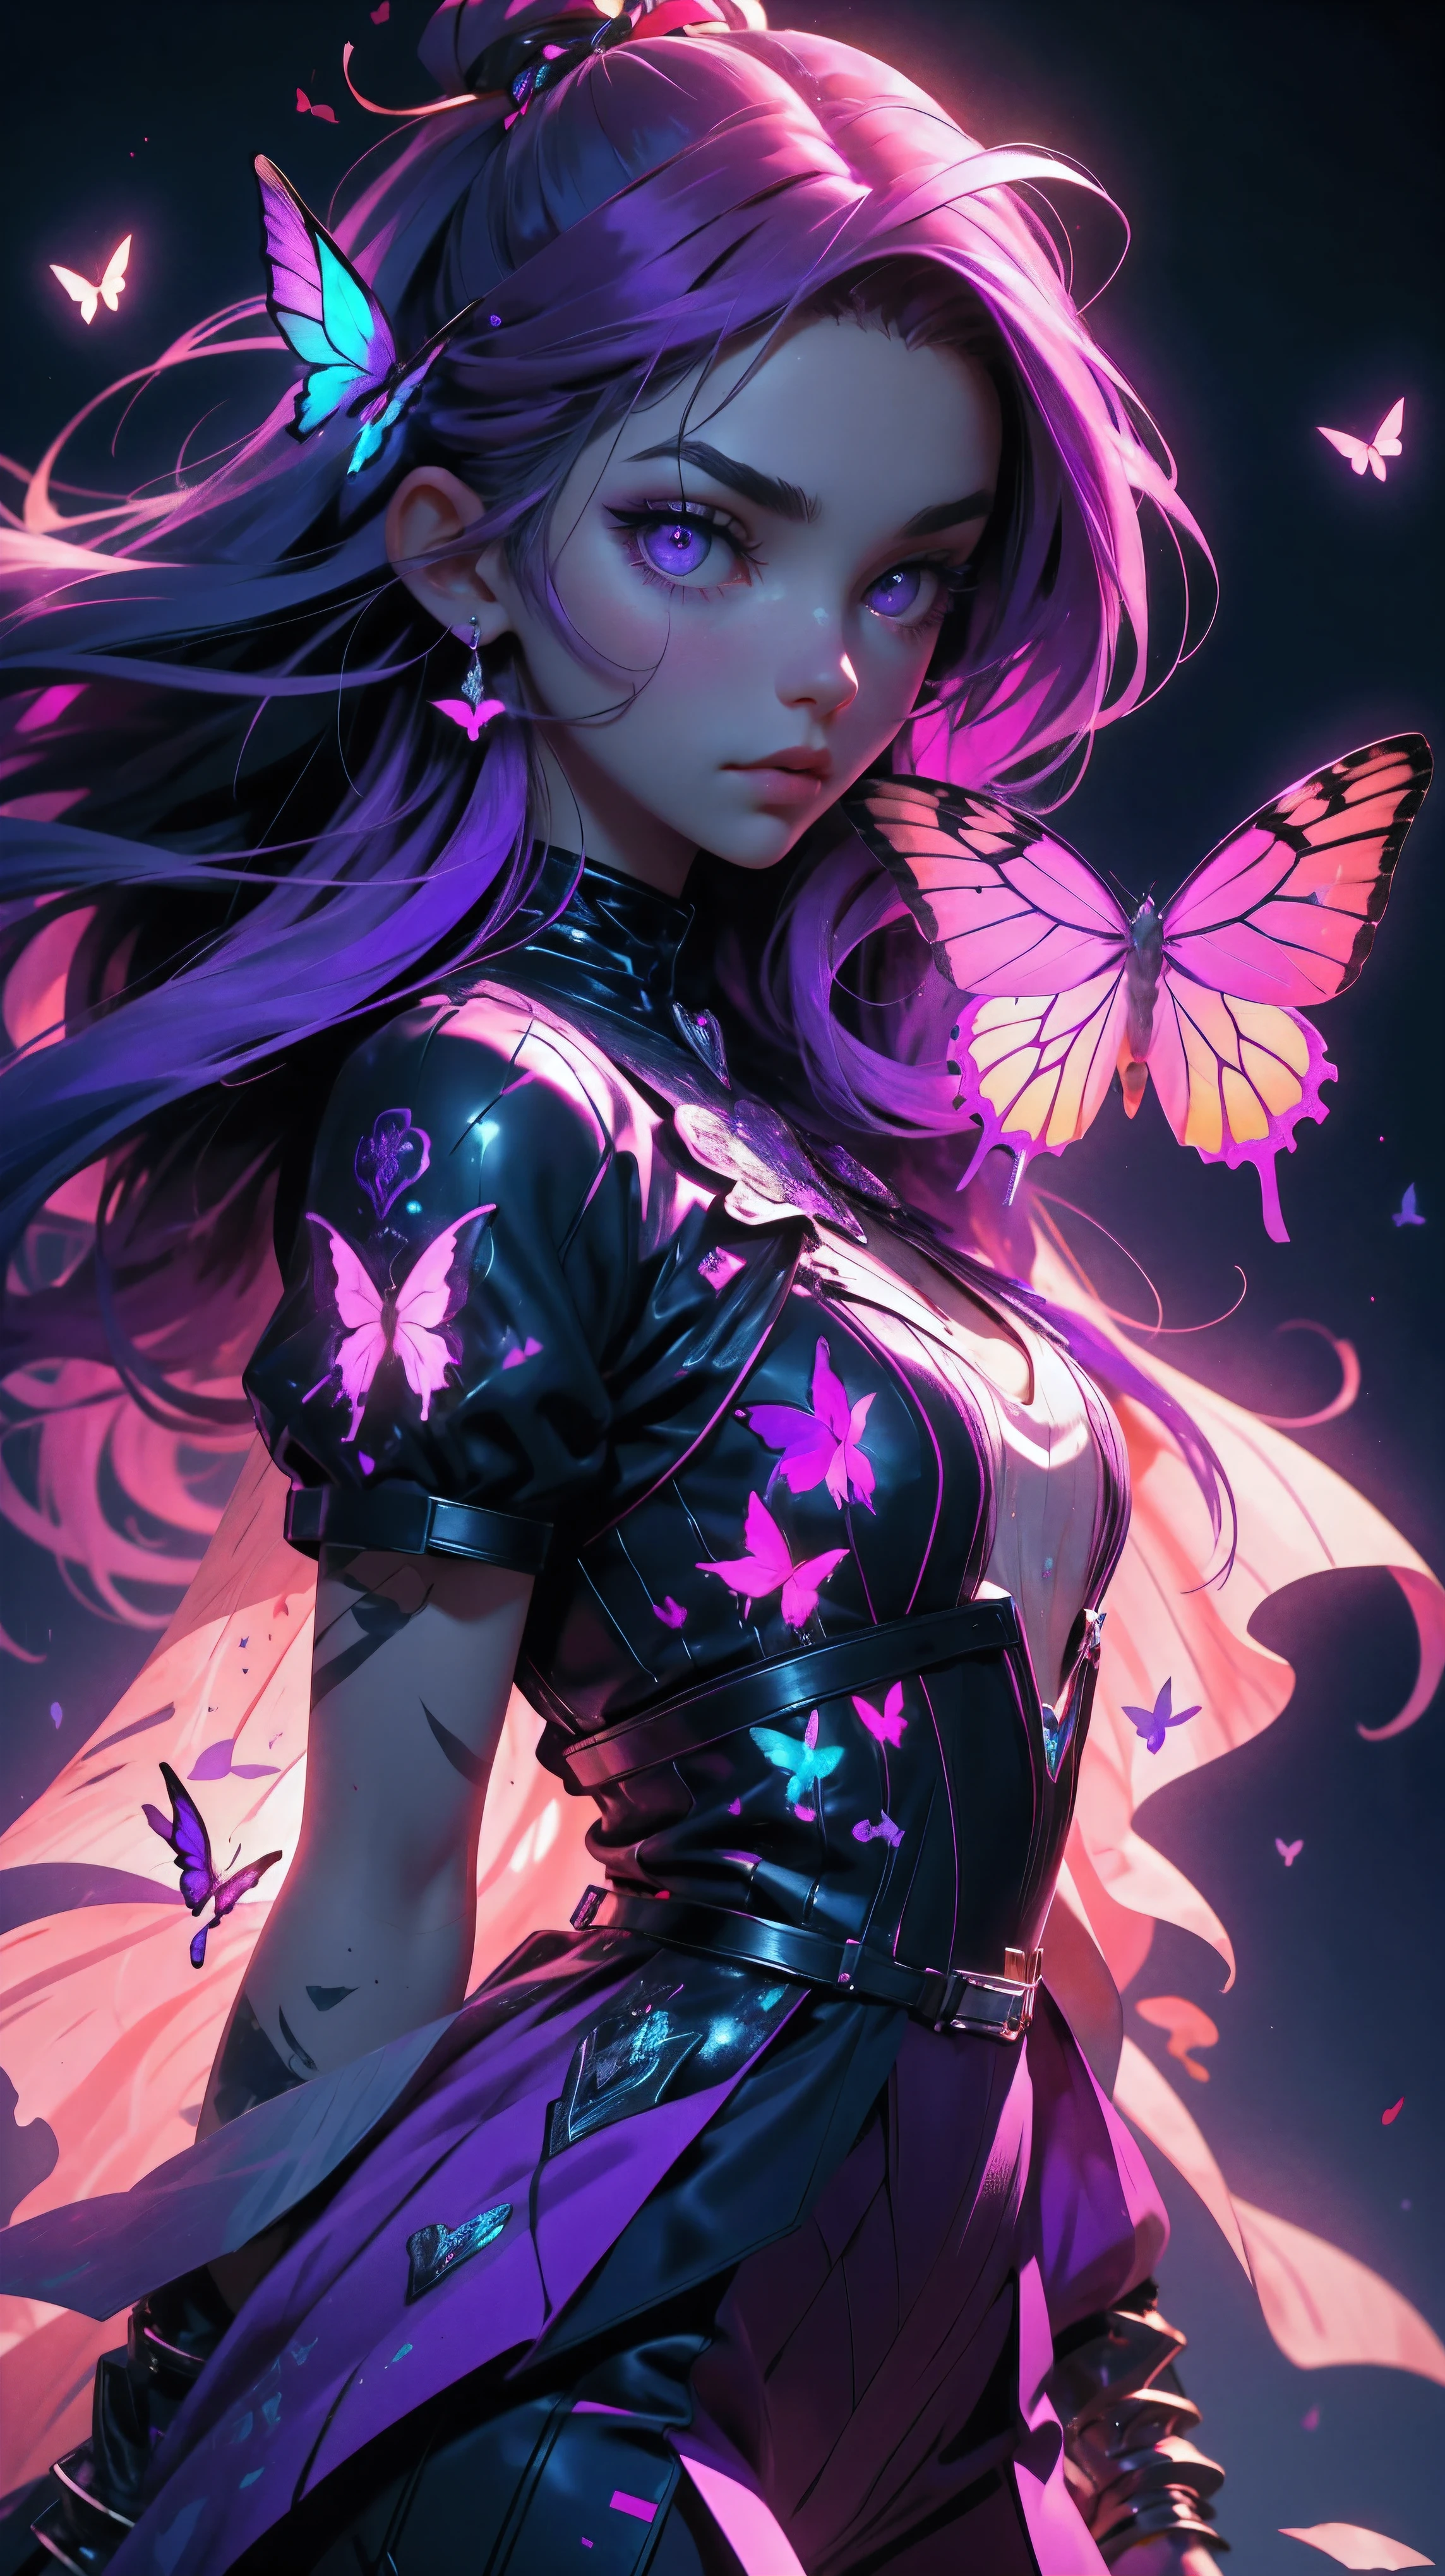 close up, beautiful young girl, purple long hair, purple eyes, neon purple butterflies, 8k, high detailed, high realism, dark fantasy art

